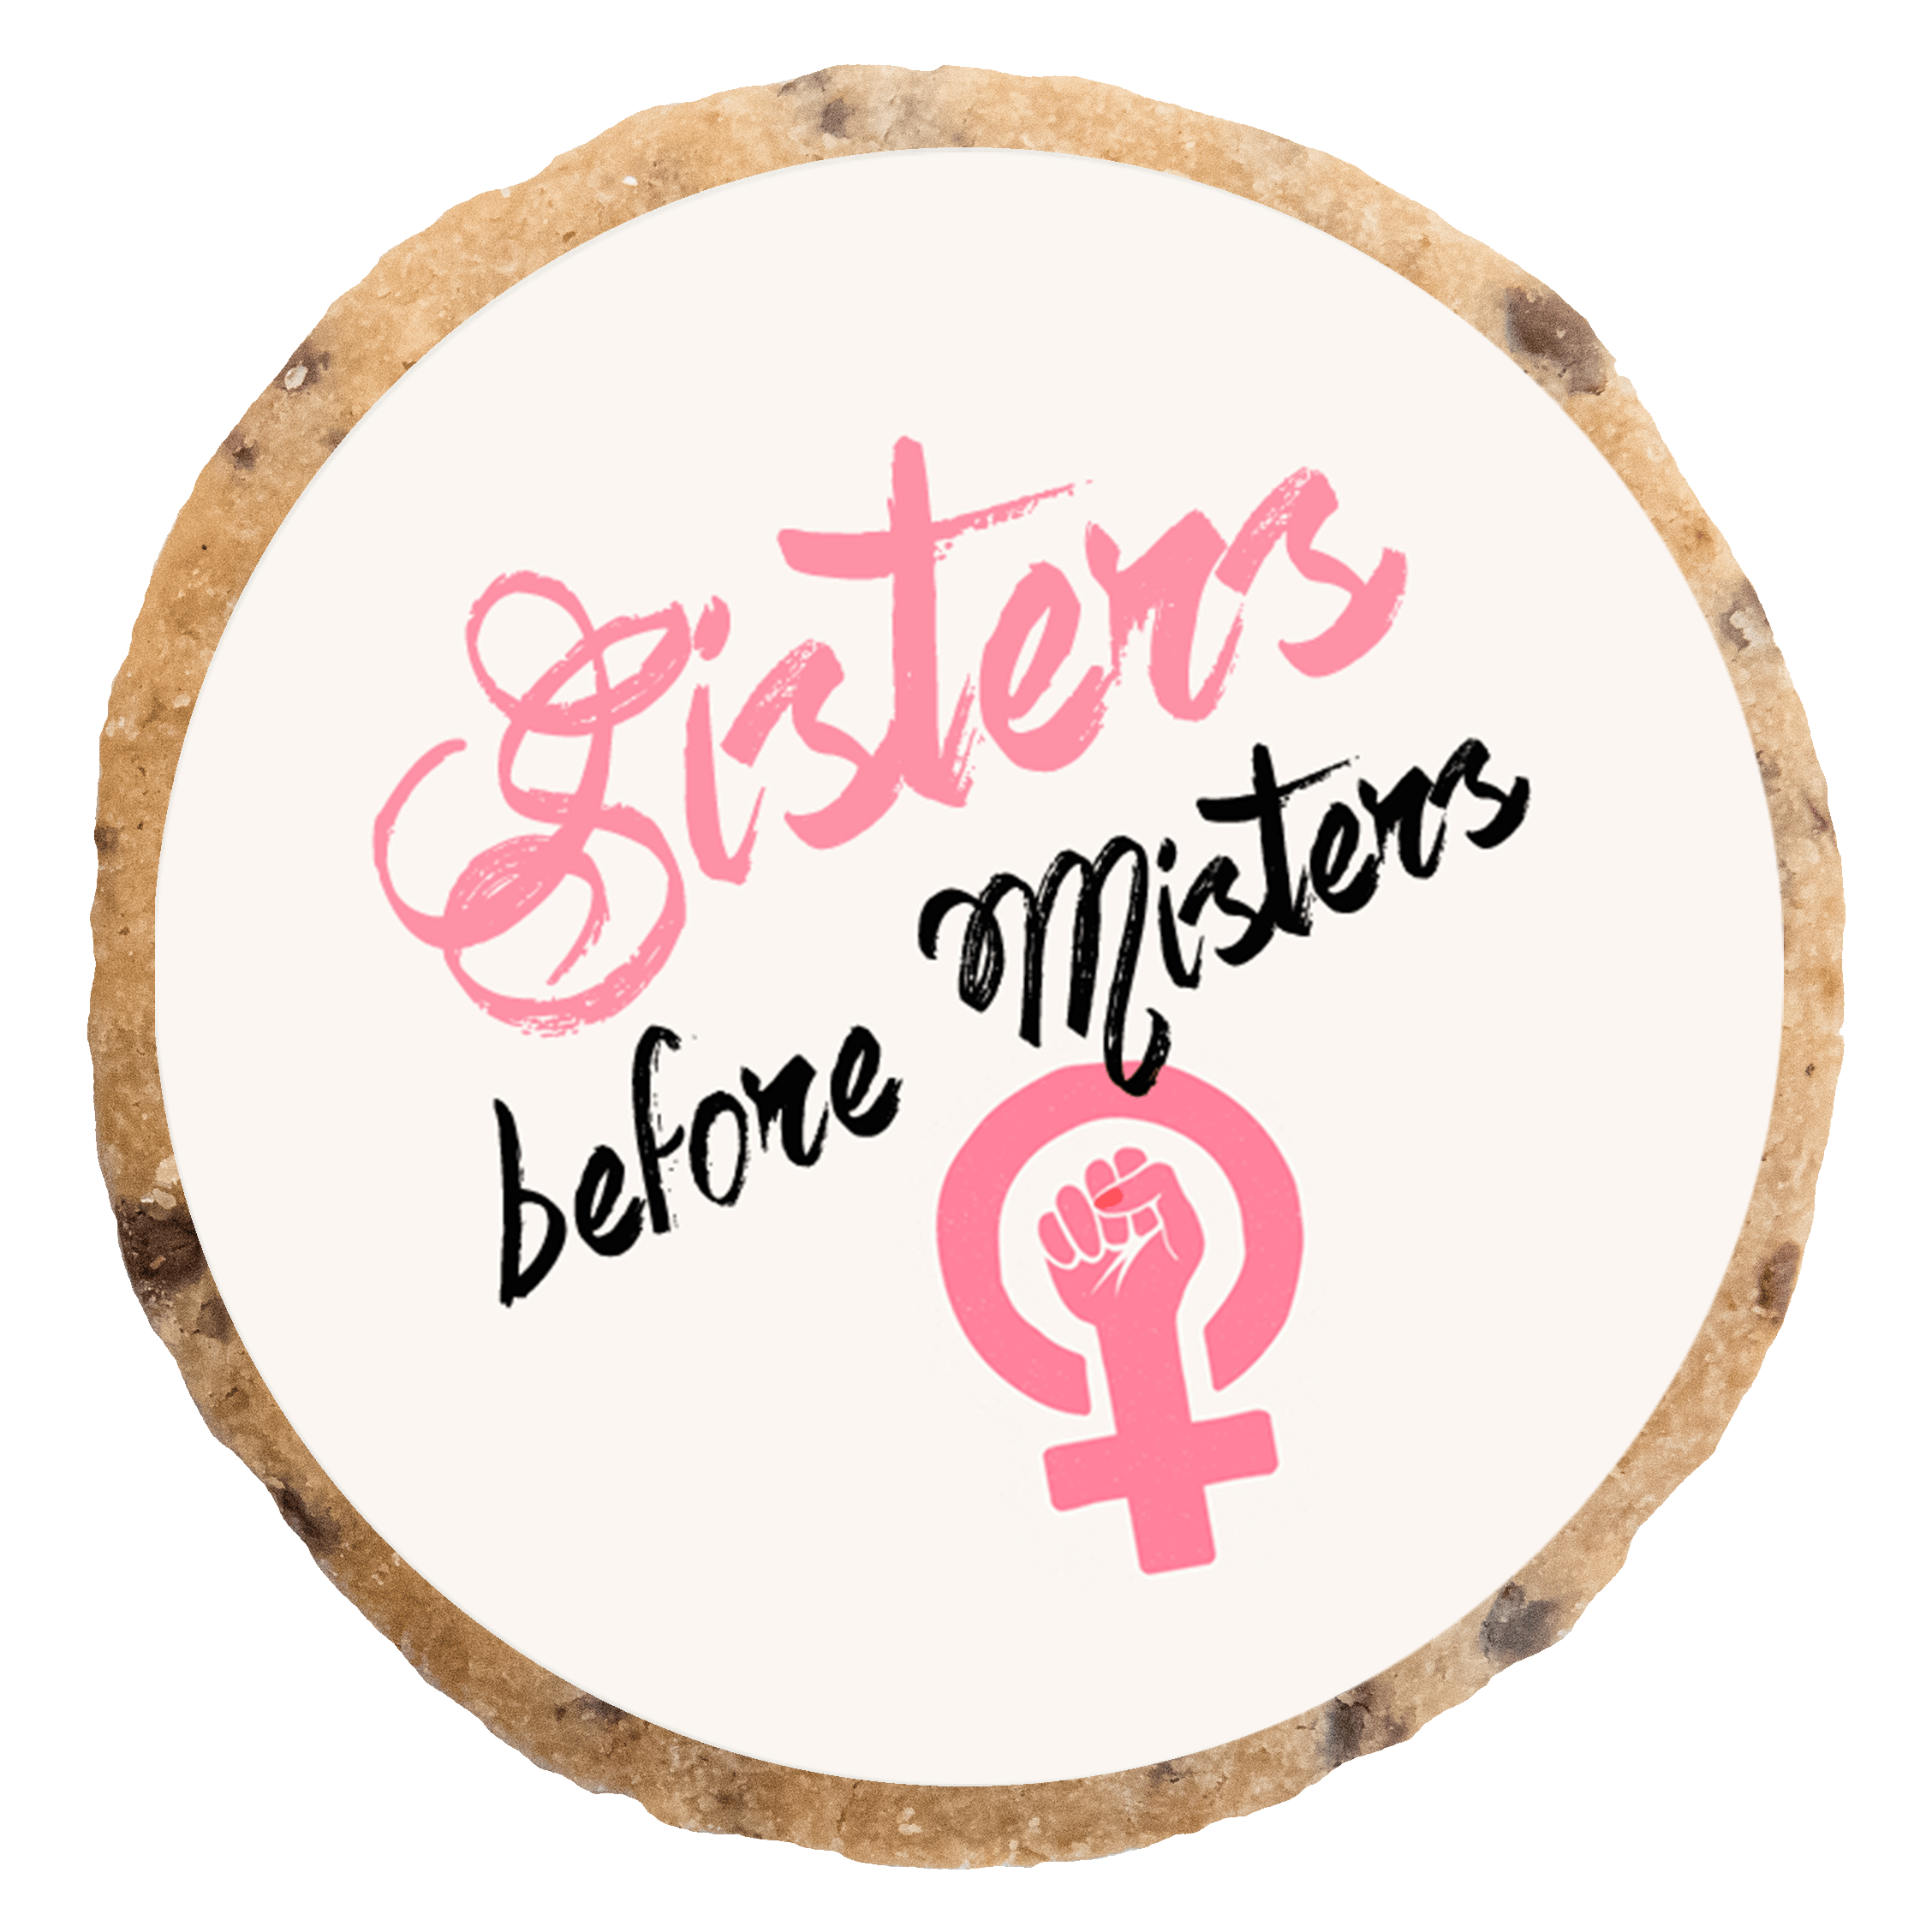 "Sisters before Misters" MotivKEKS